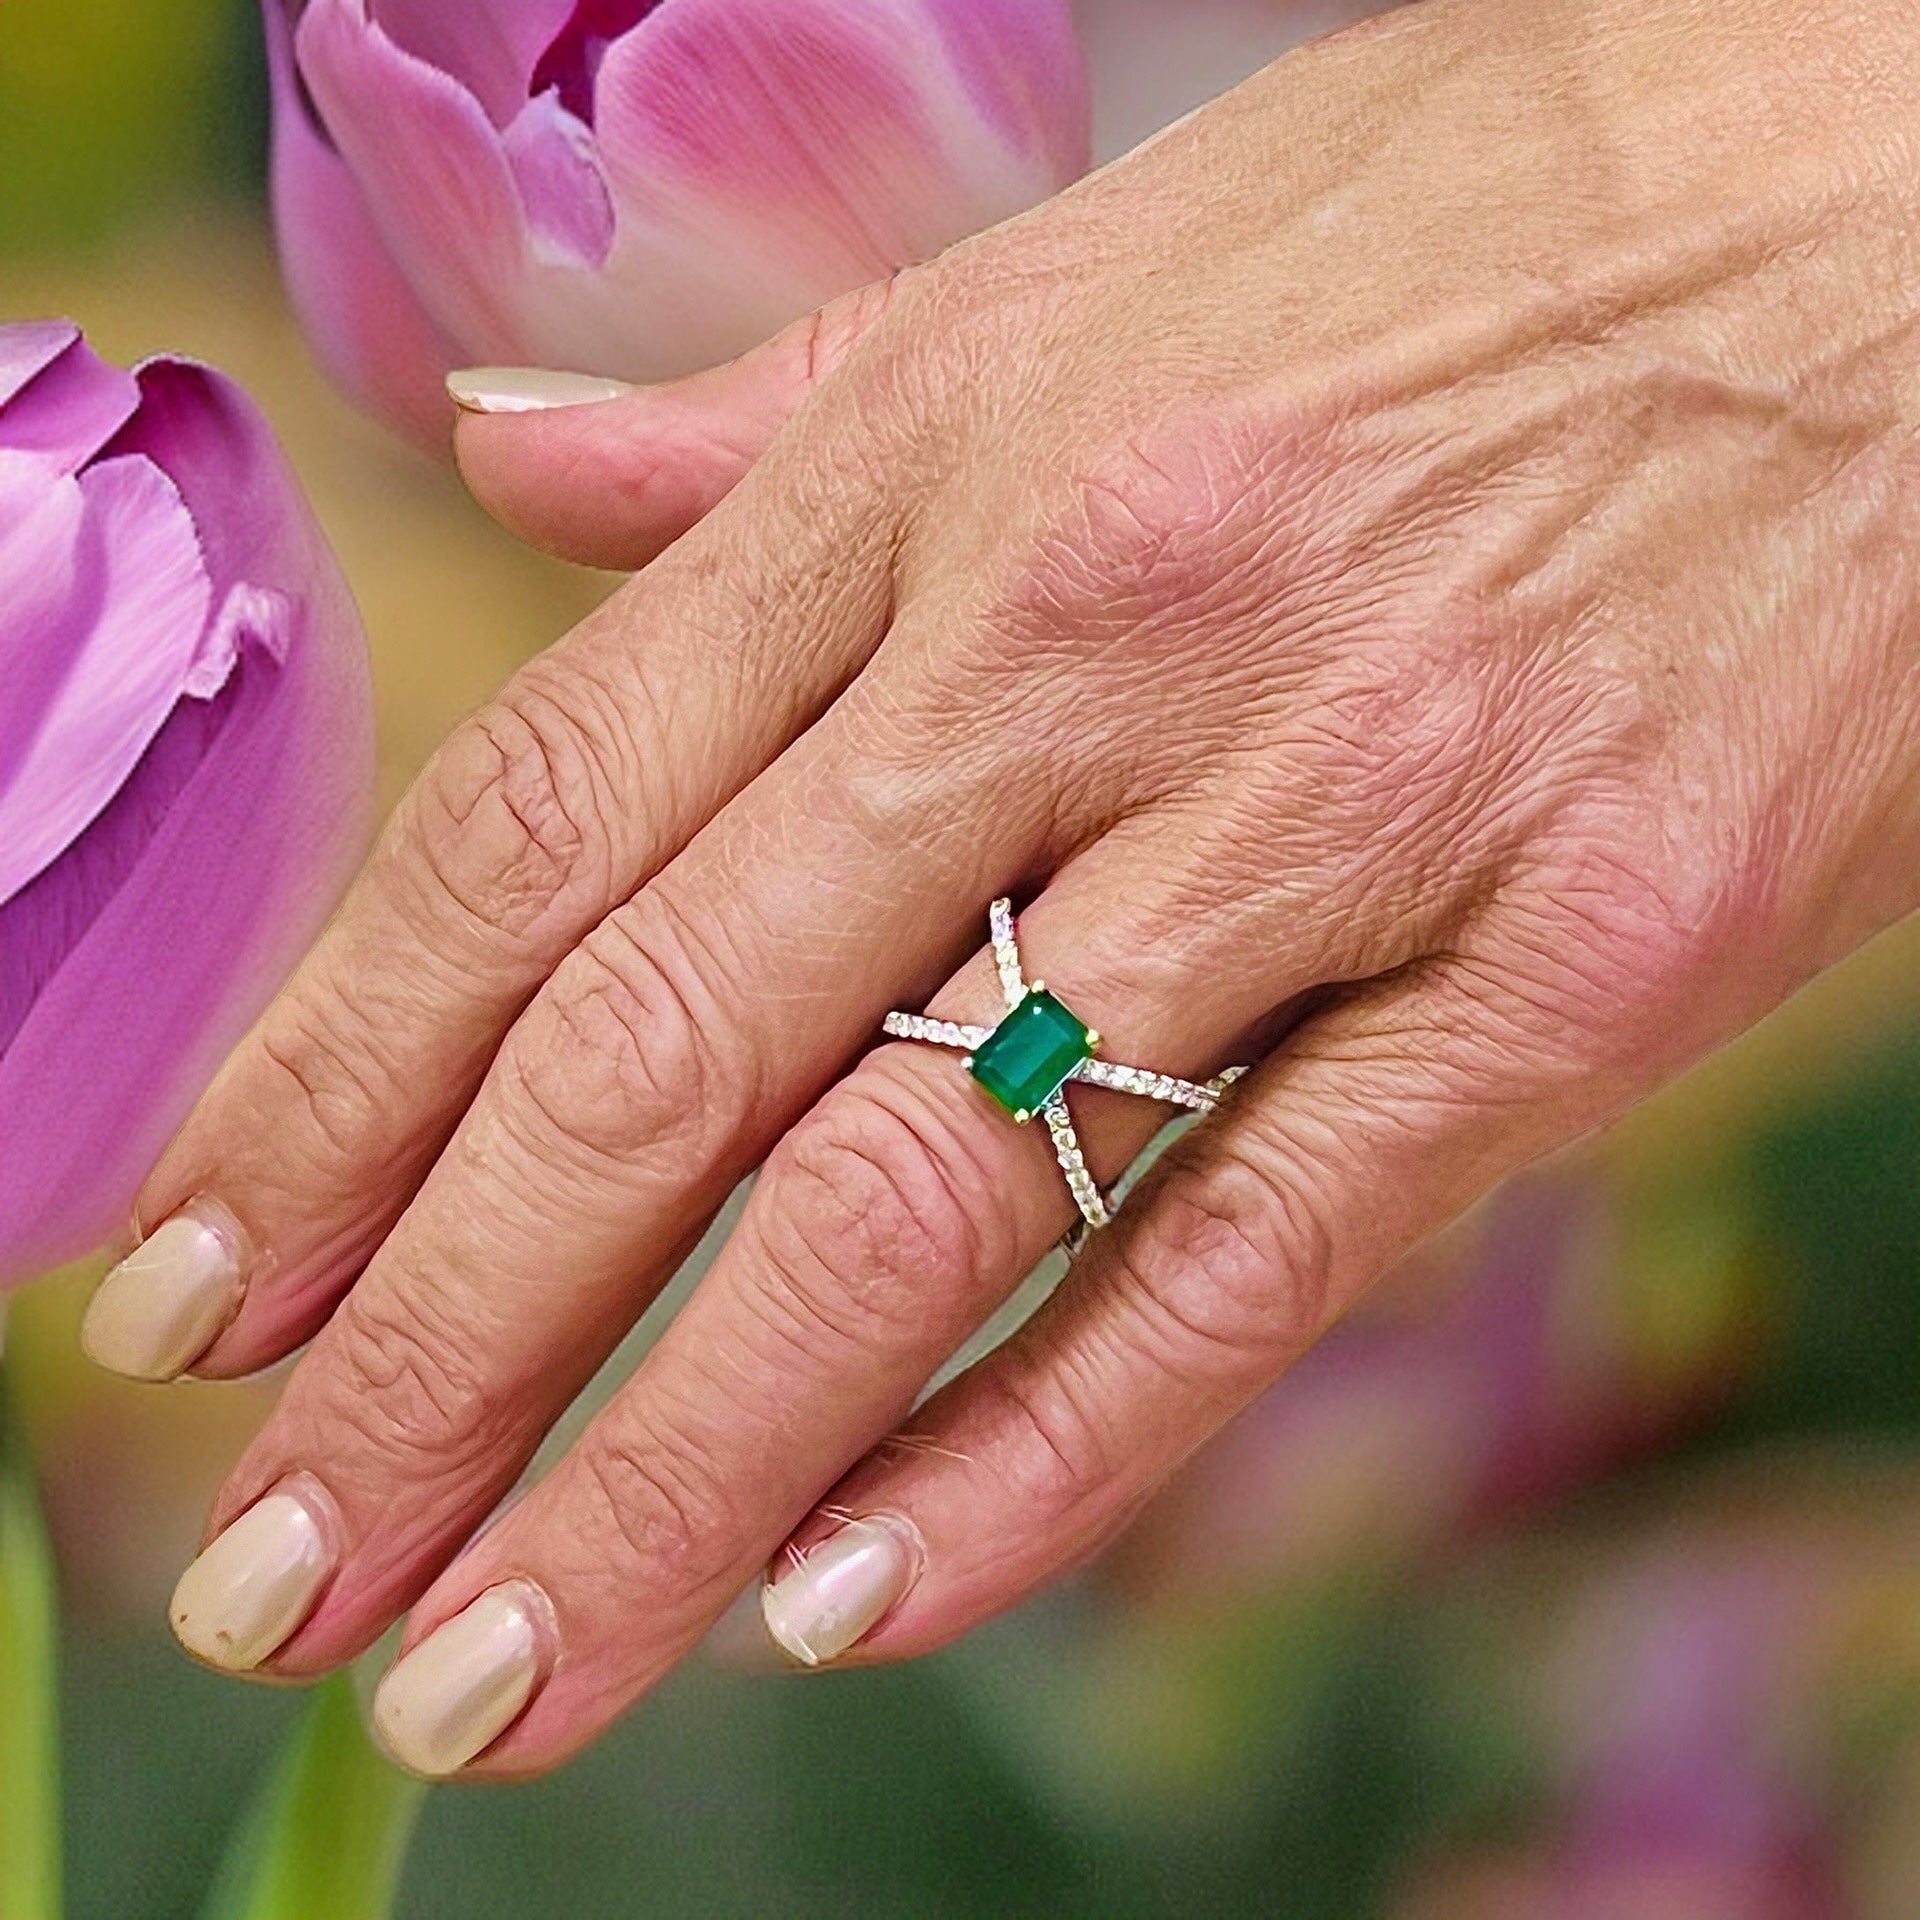 Natural Emerald Diamond Ring Size 6.5 14k W Gold 1.7 TCW Certified $4,975 217846 - Certified Fine Jewelry